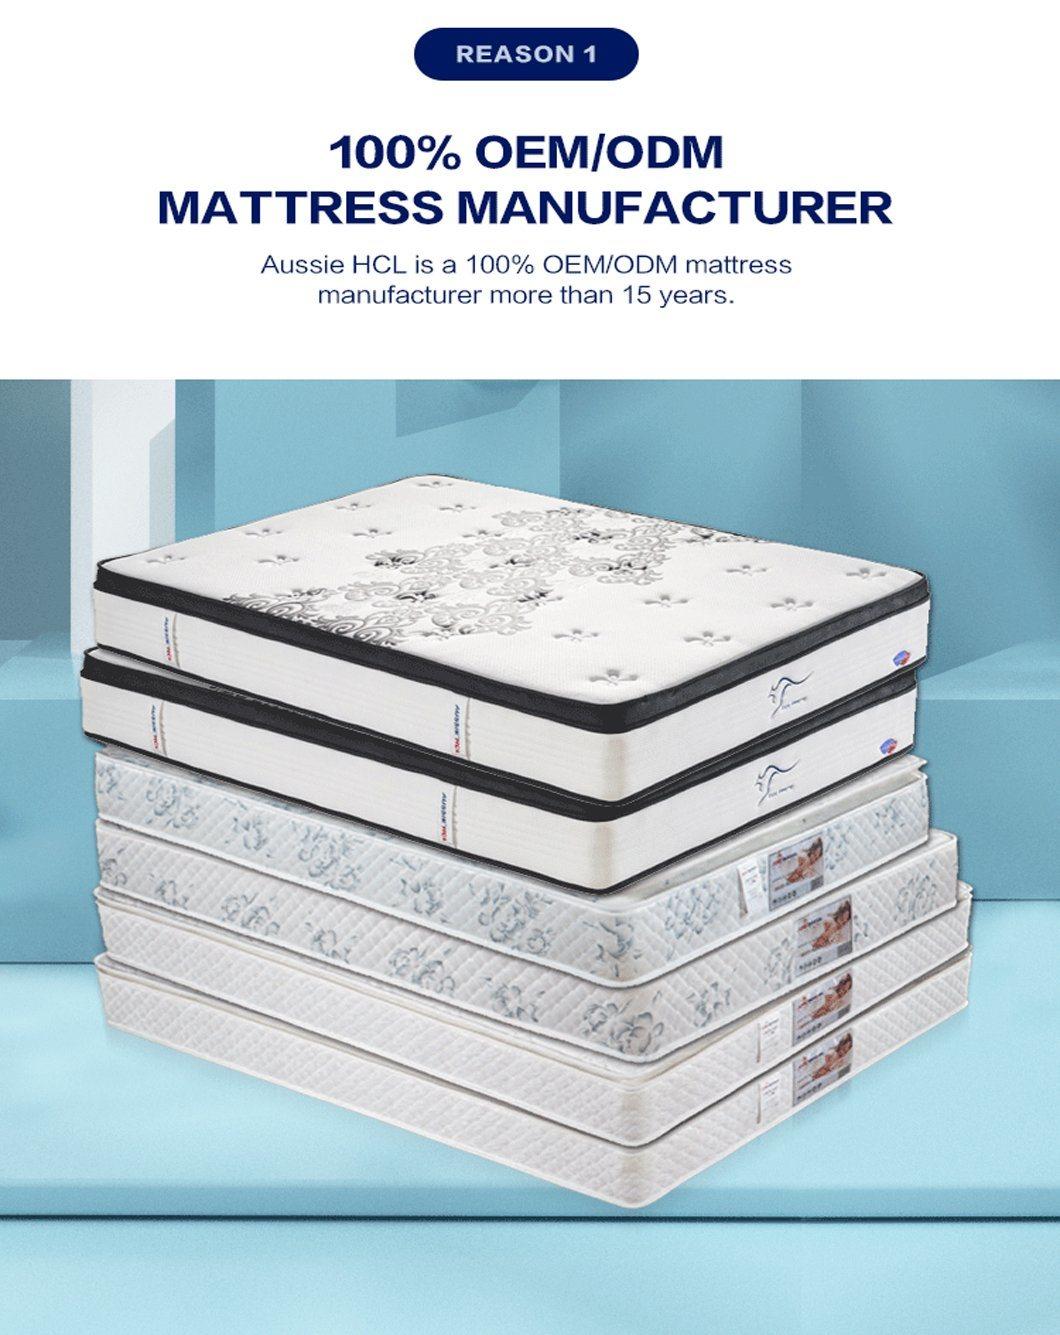 Quality Roll Sleep Well High Density Rebound Foam Single Double Full King Queen Size Mattress in a Box